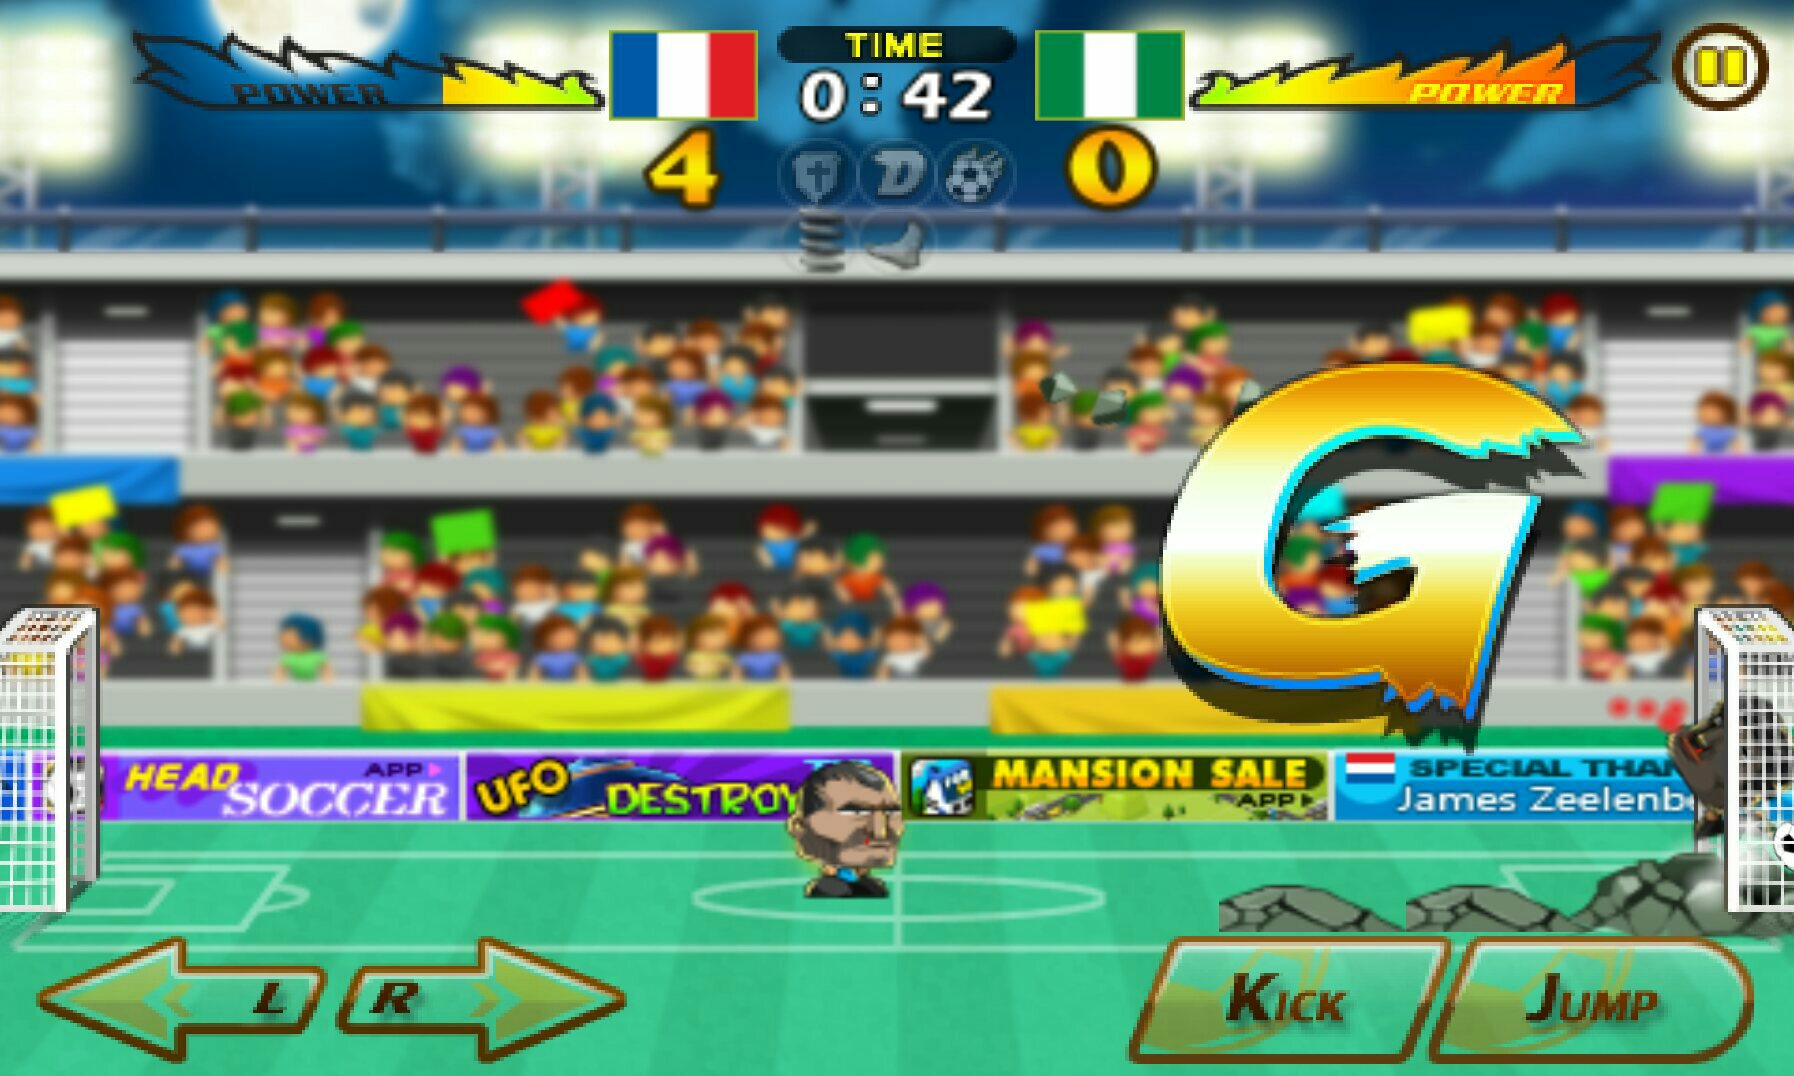 Head Soccer - 2 New character!! United kingdom & France. Wait